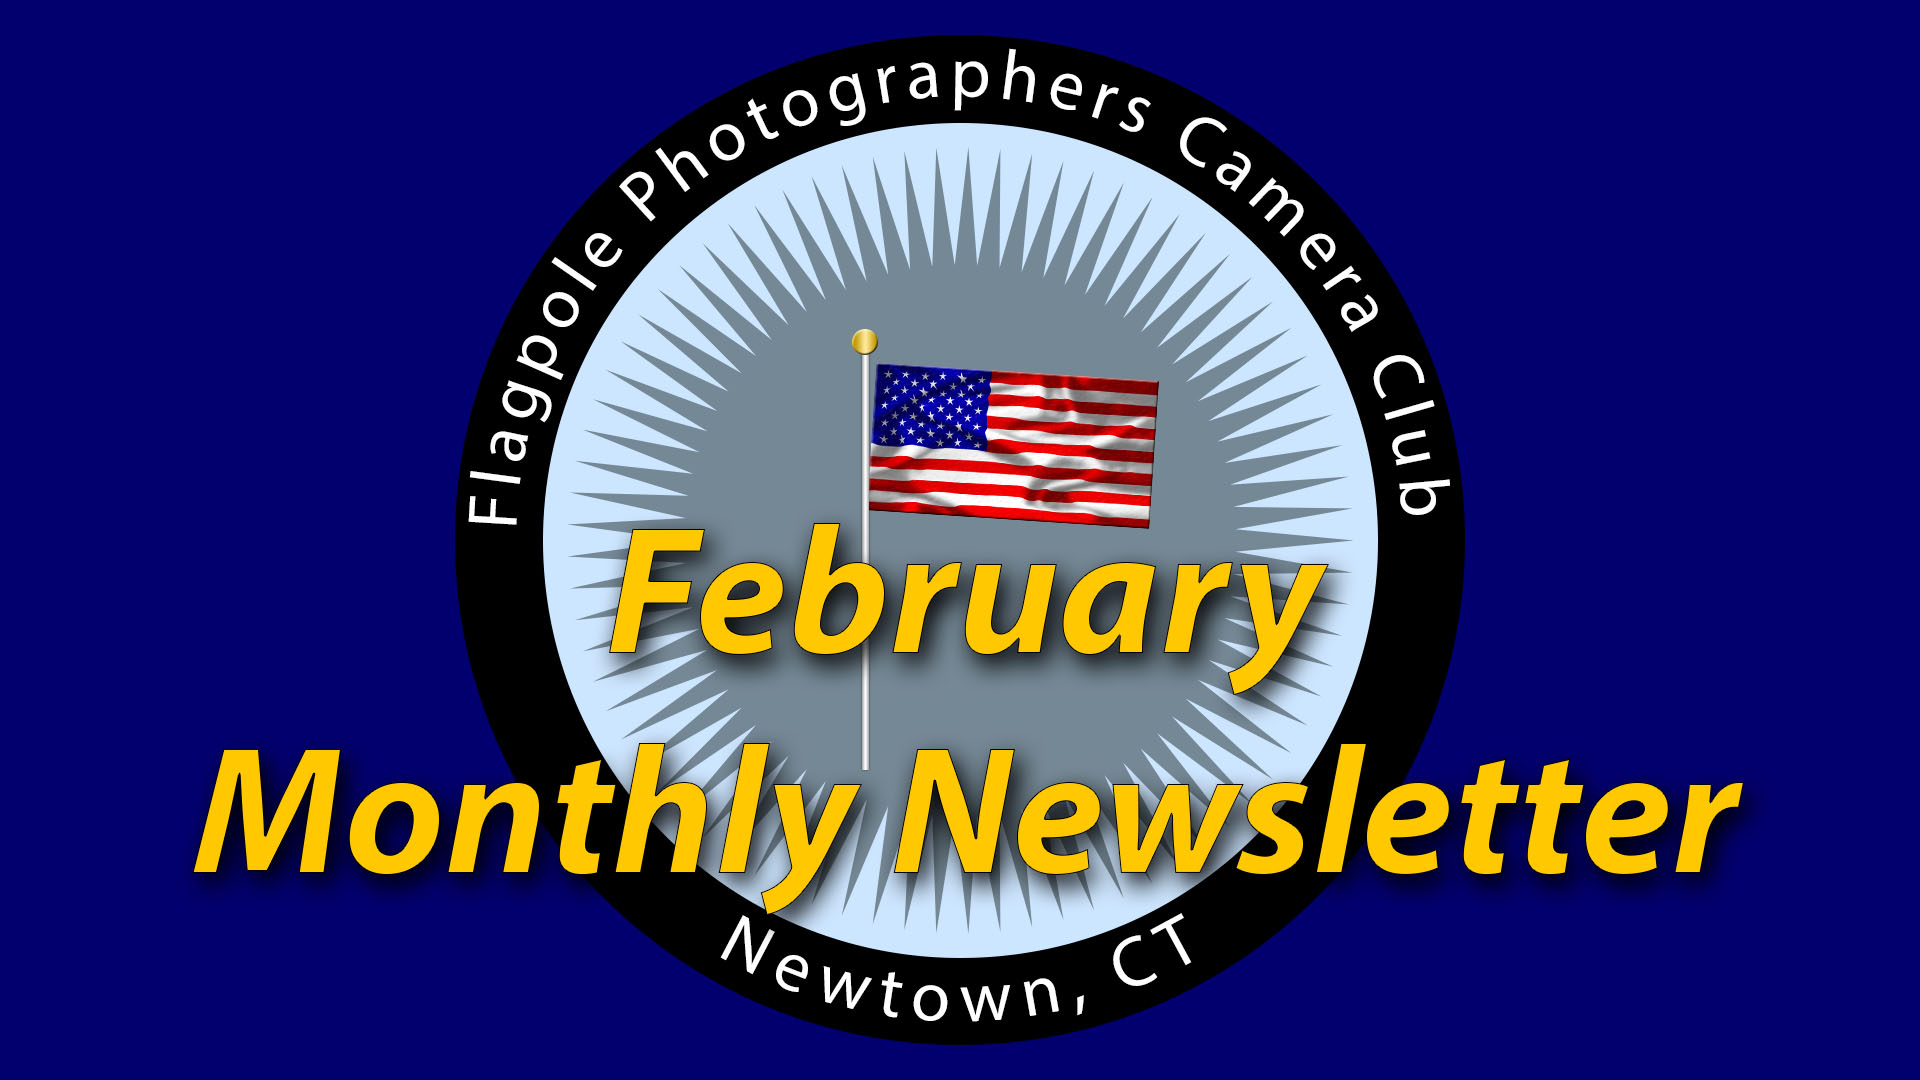 Feb 2017 Monthly Newsletter